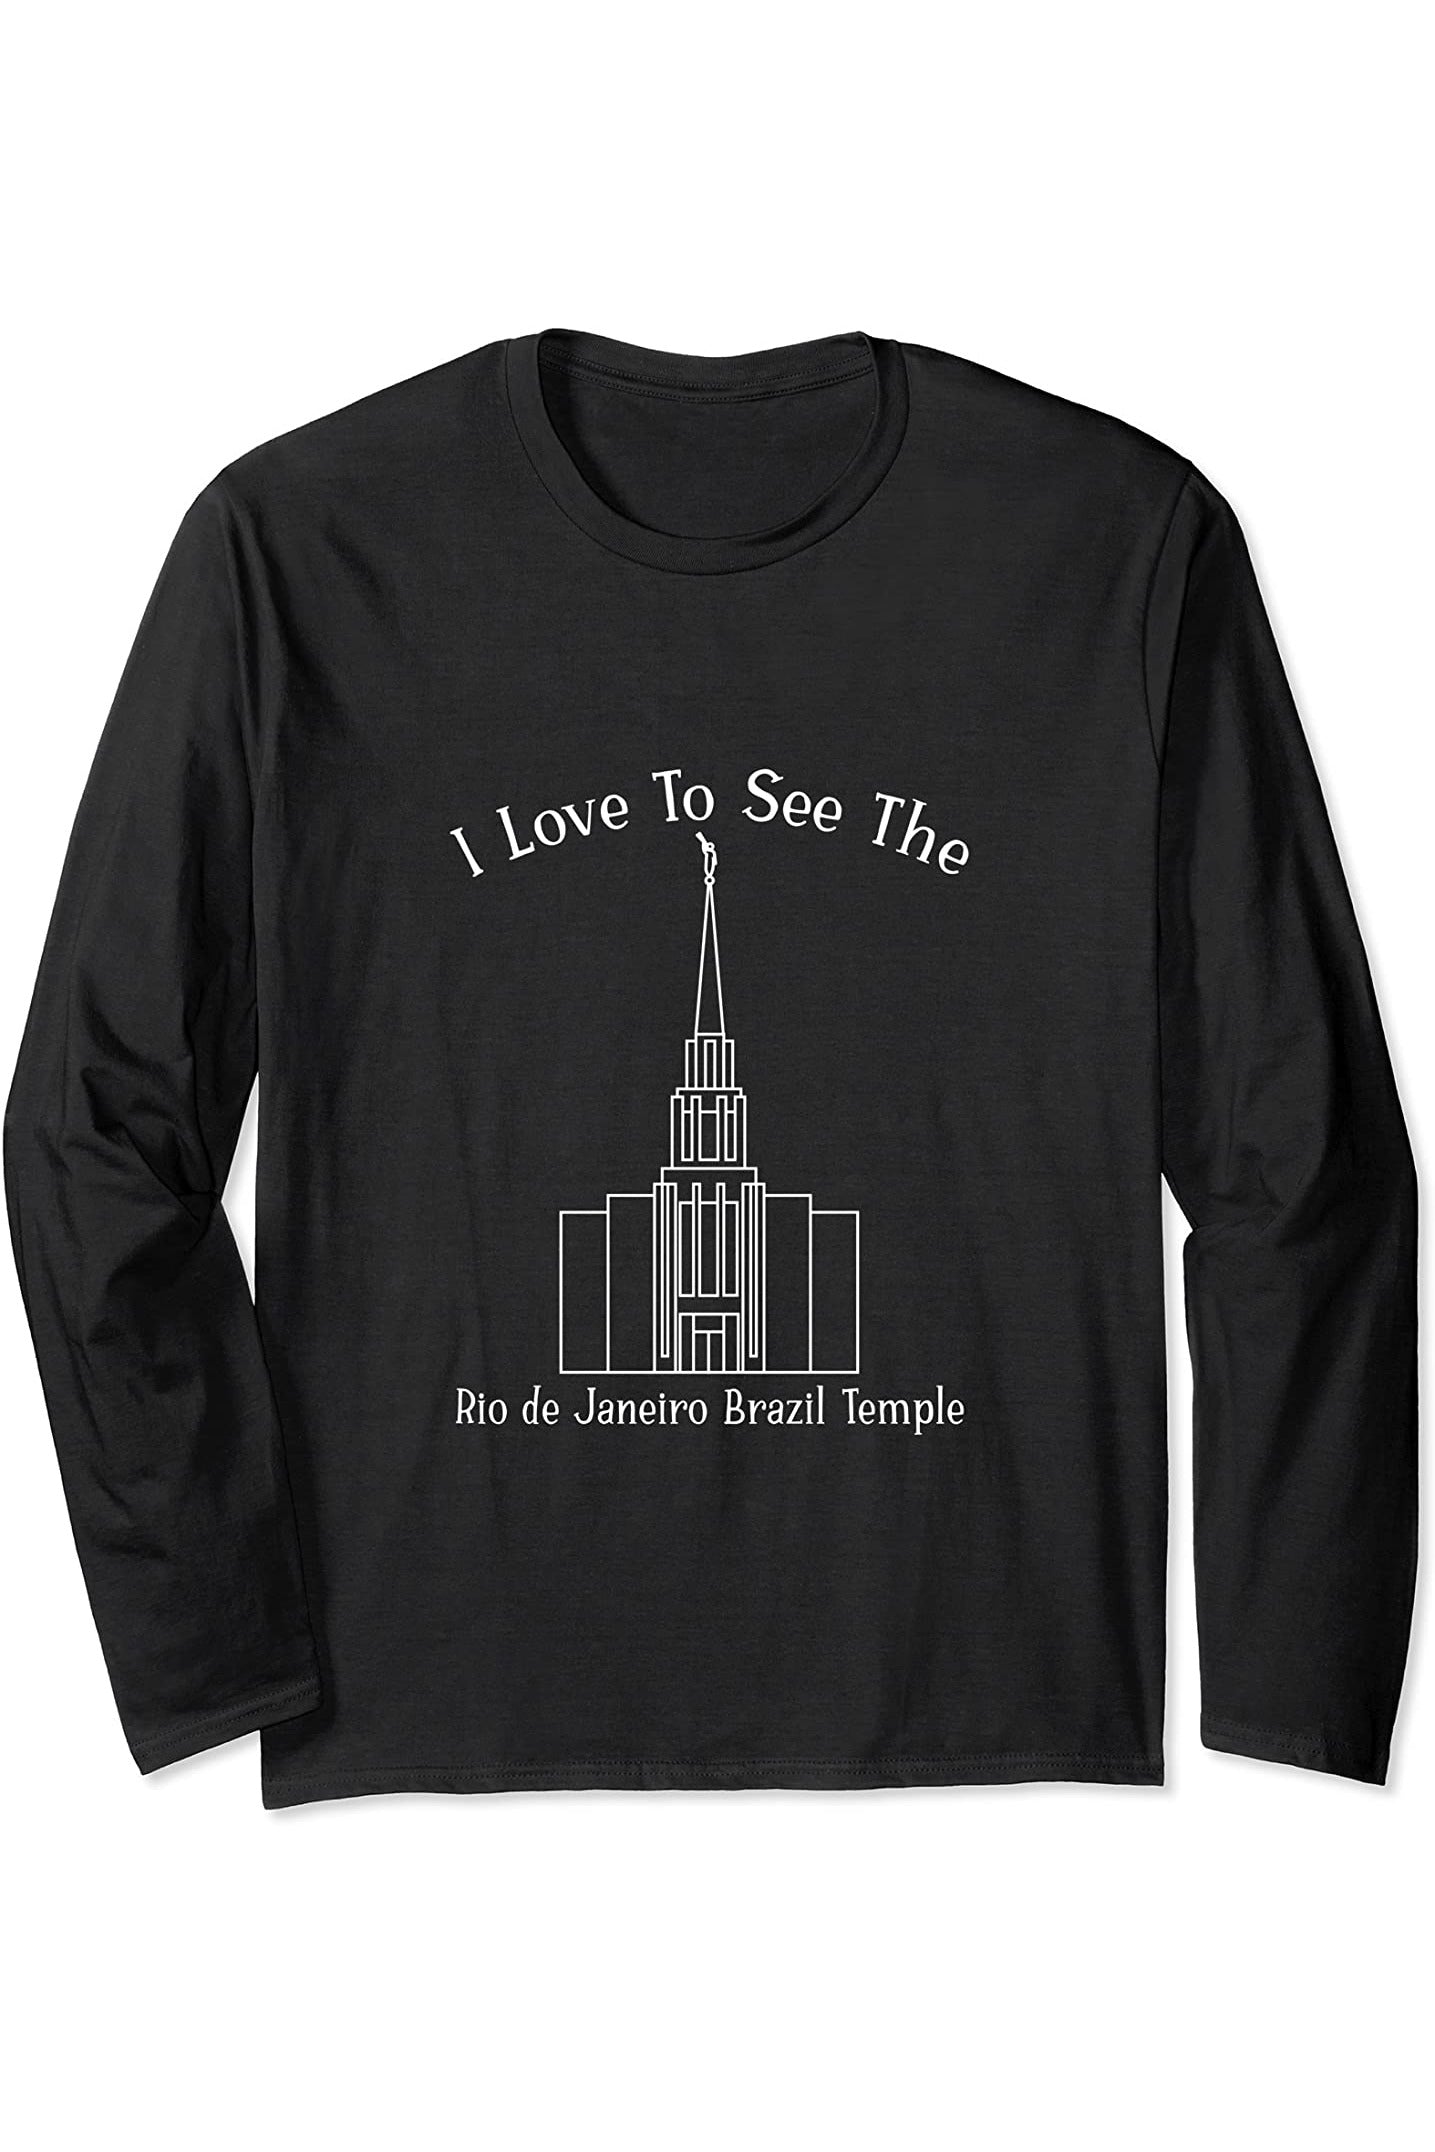 Rio de Janeiro Brazil Temple Long Sleeve T-Shirt - Happy Style (English) US